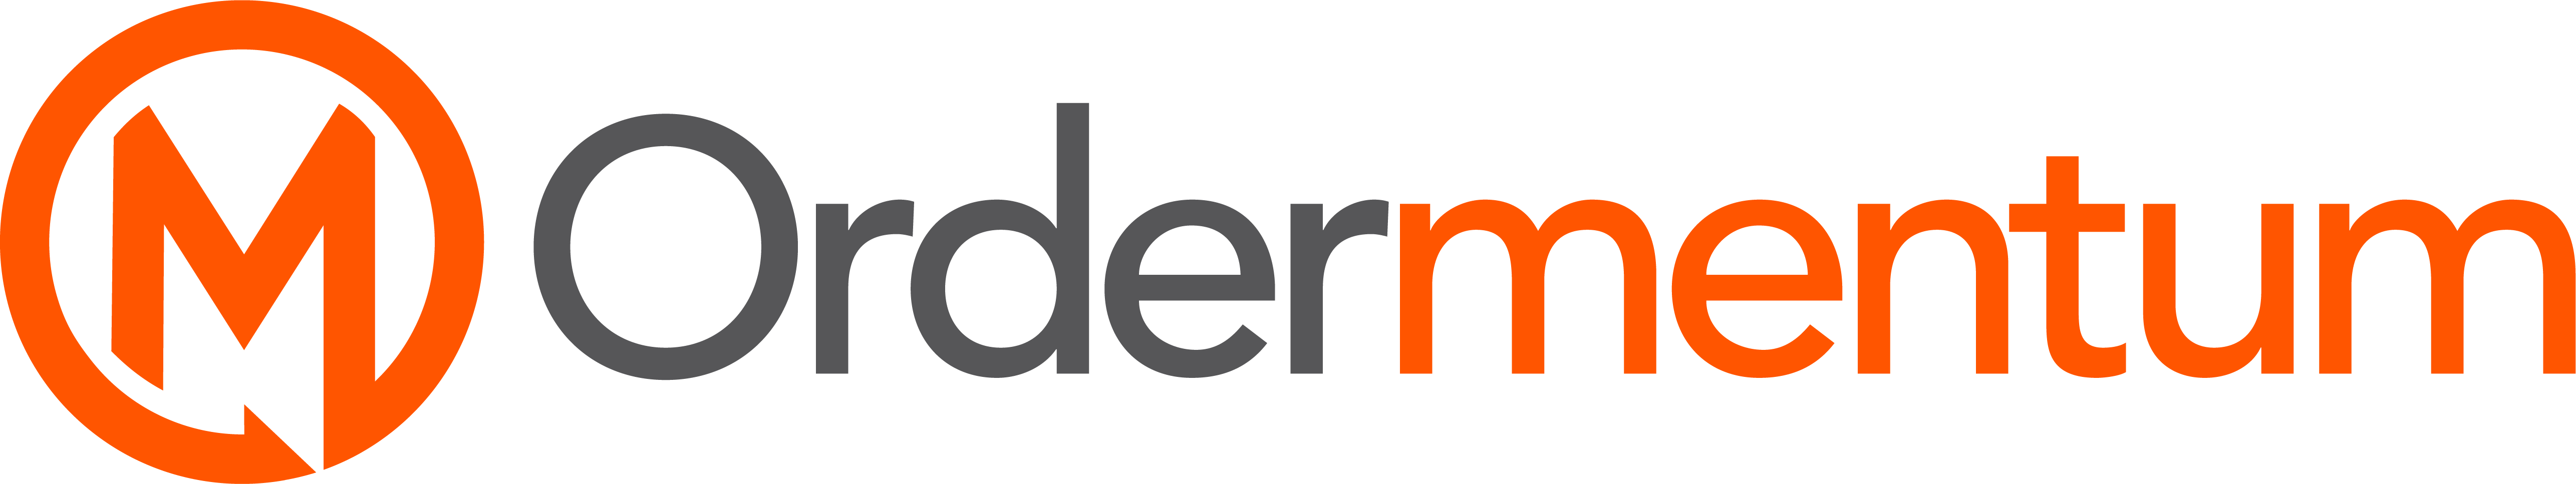 Ordermentum logo